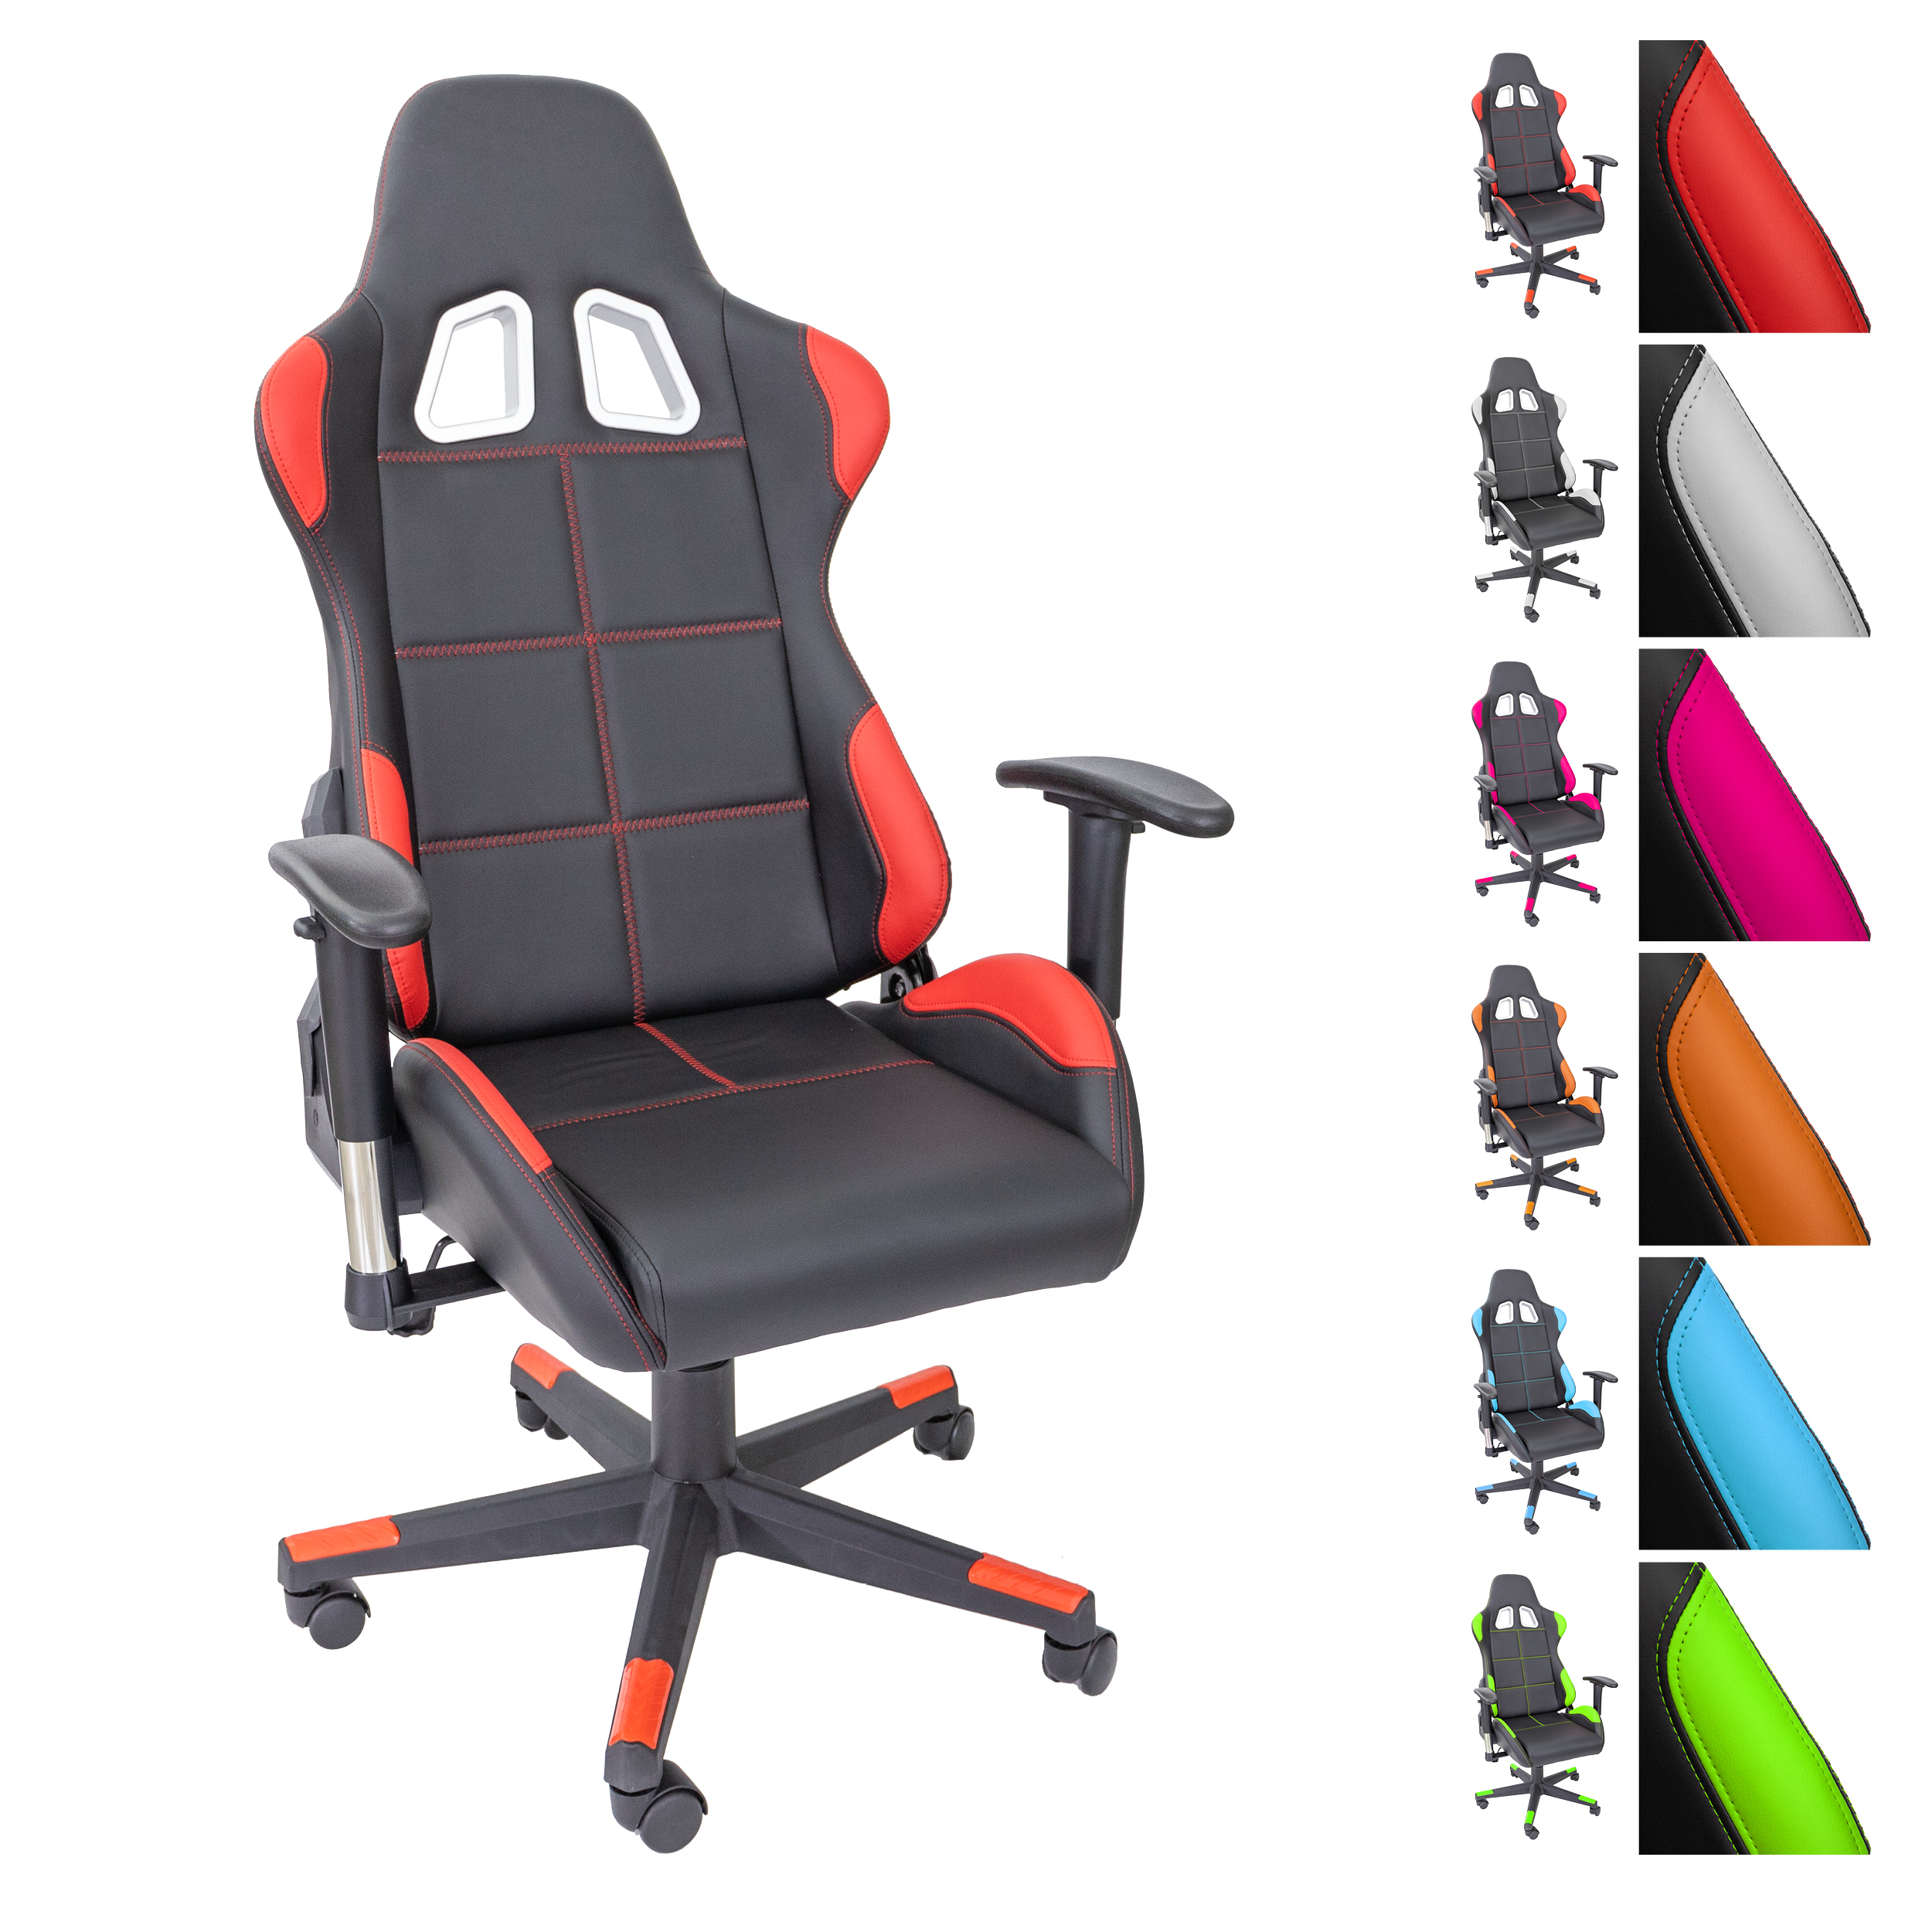 schwarz/rot TPFLIVING Gaming Chair, Gaming Stuhl Fire